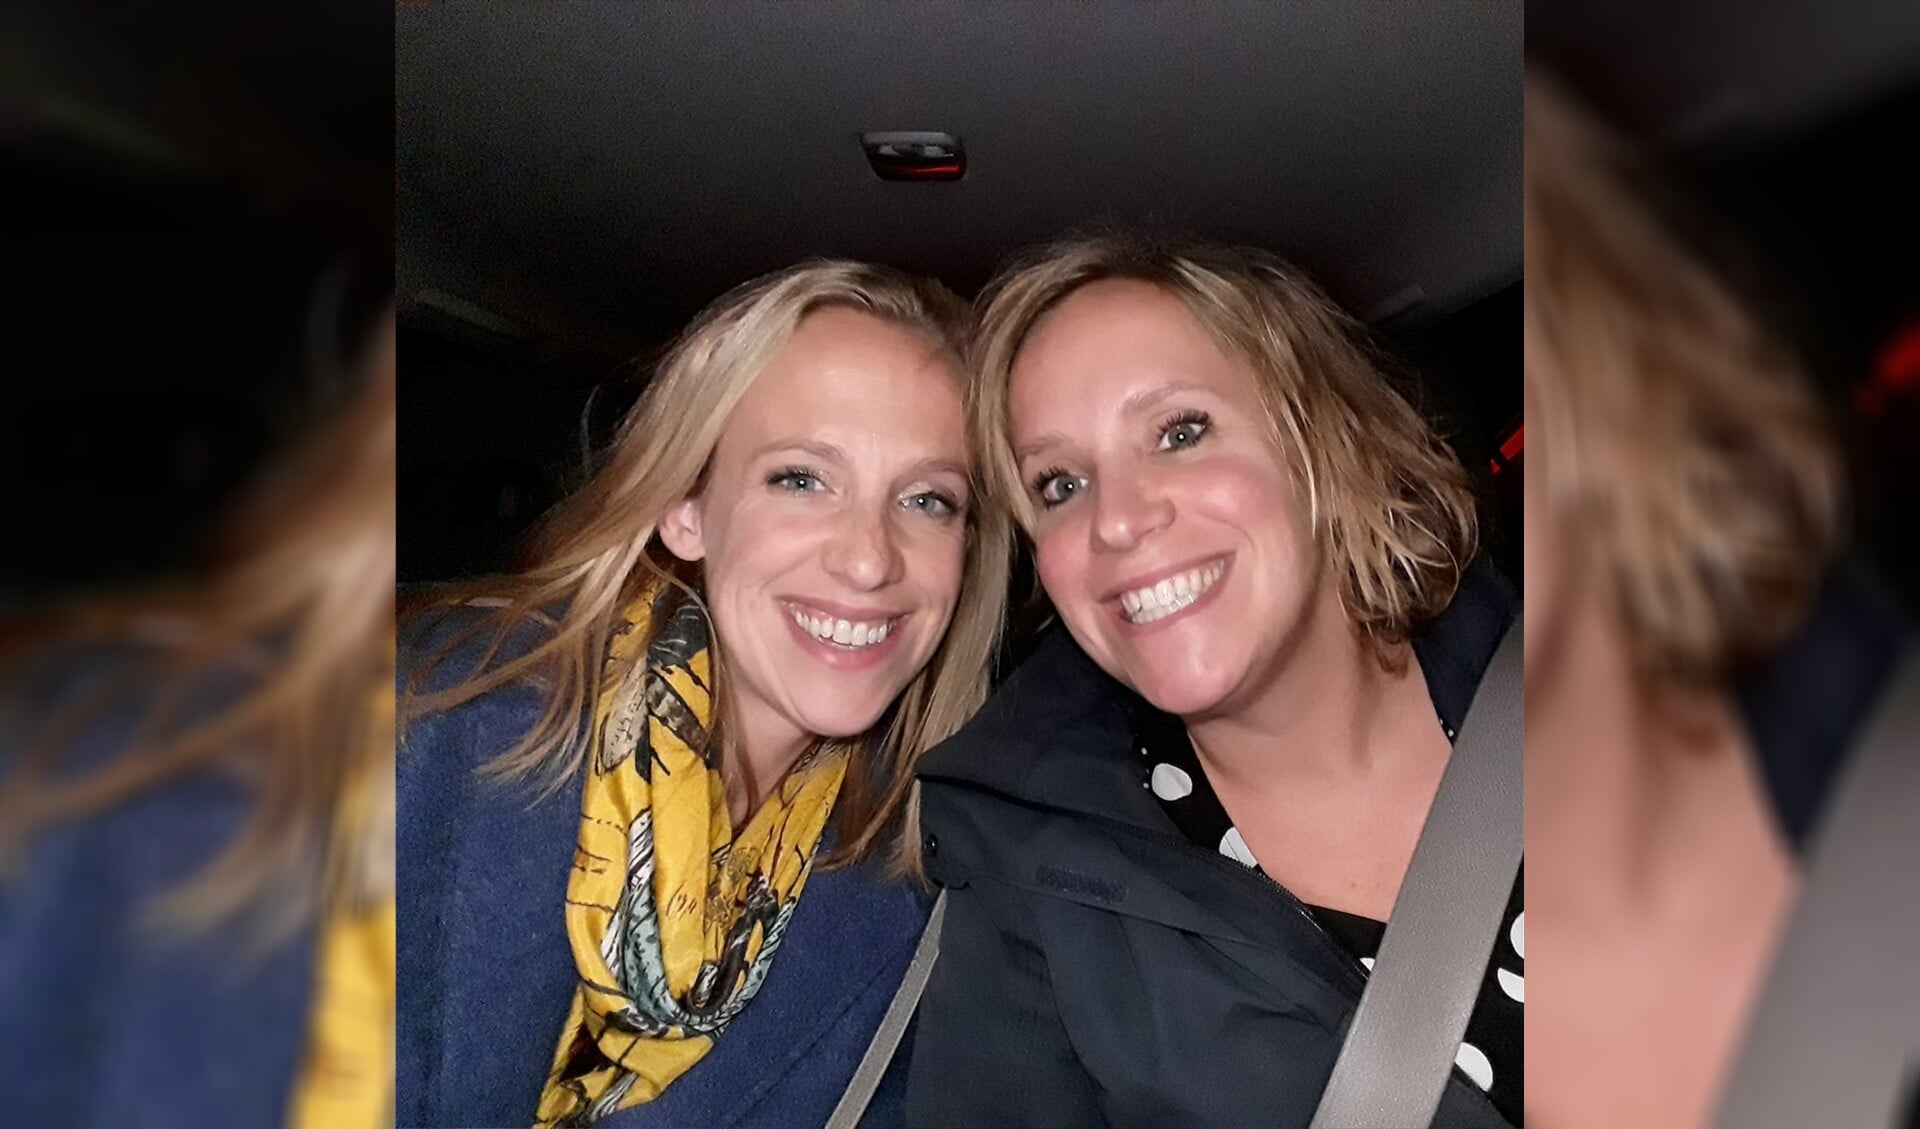 Cynthia en haar lieve zus Lindsey die spontaan een crowdfunding is gestart.